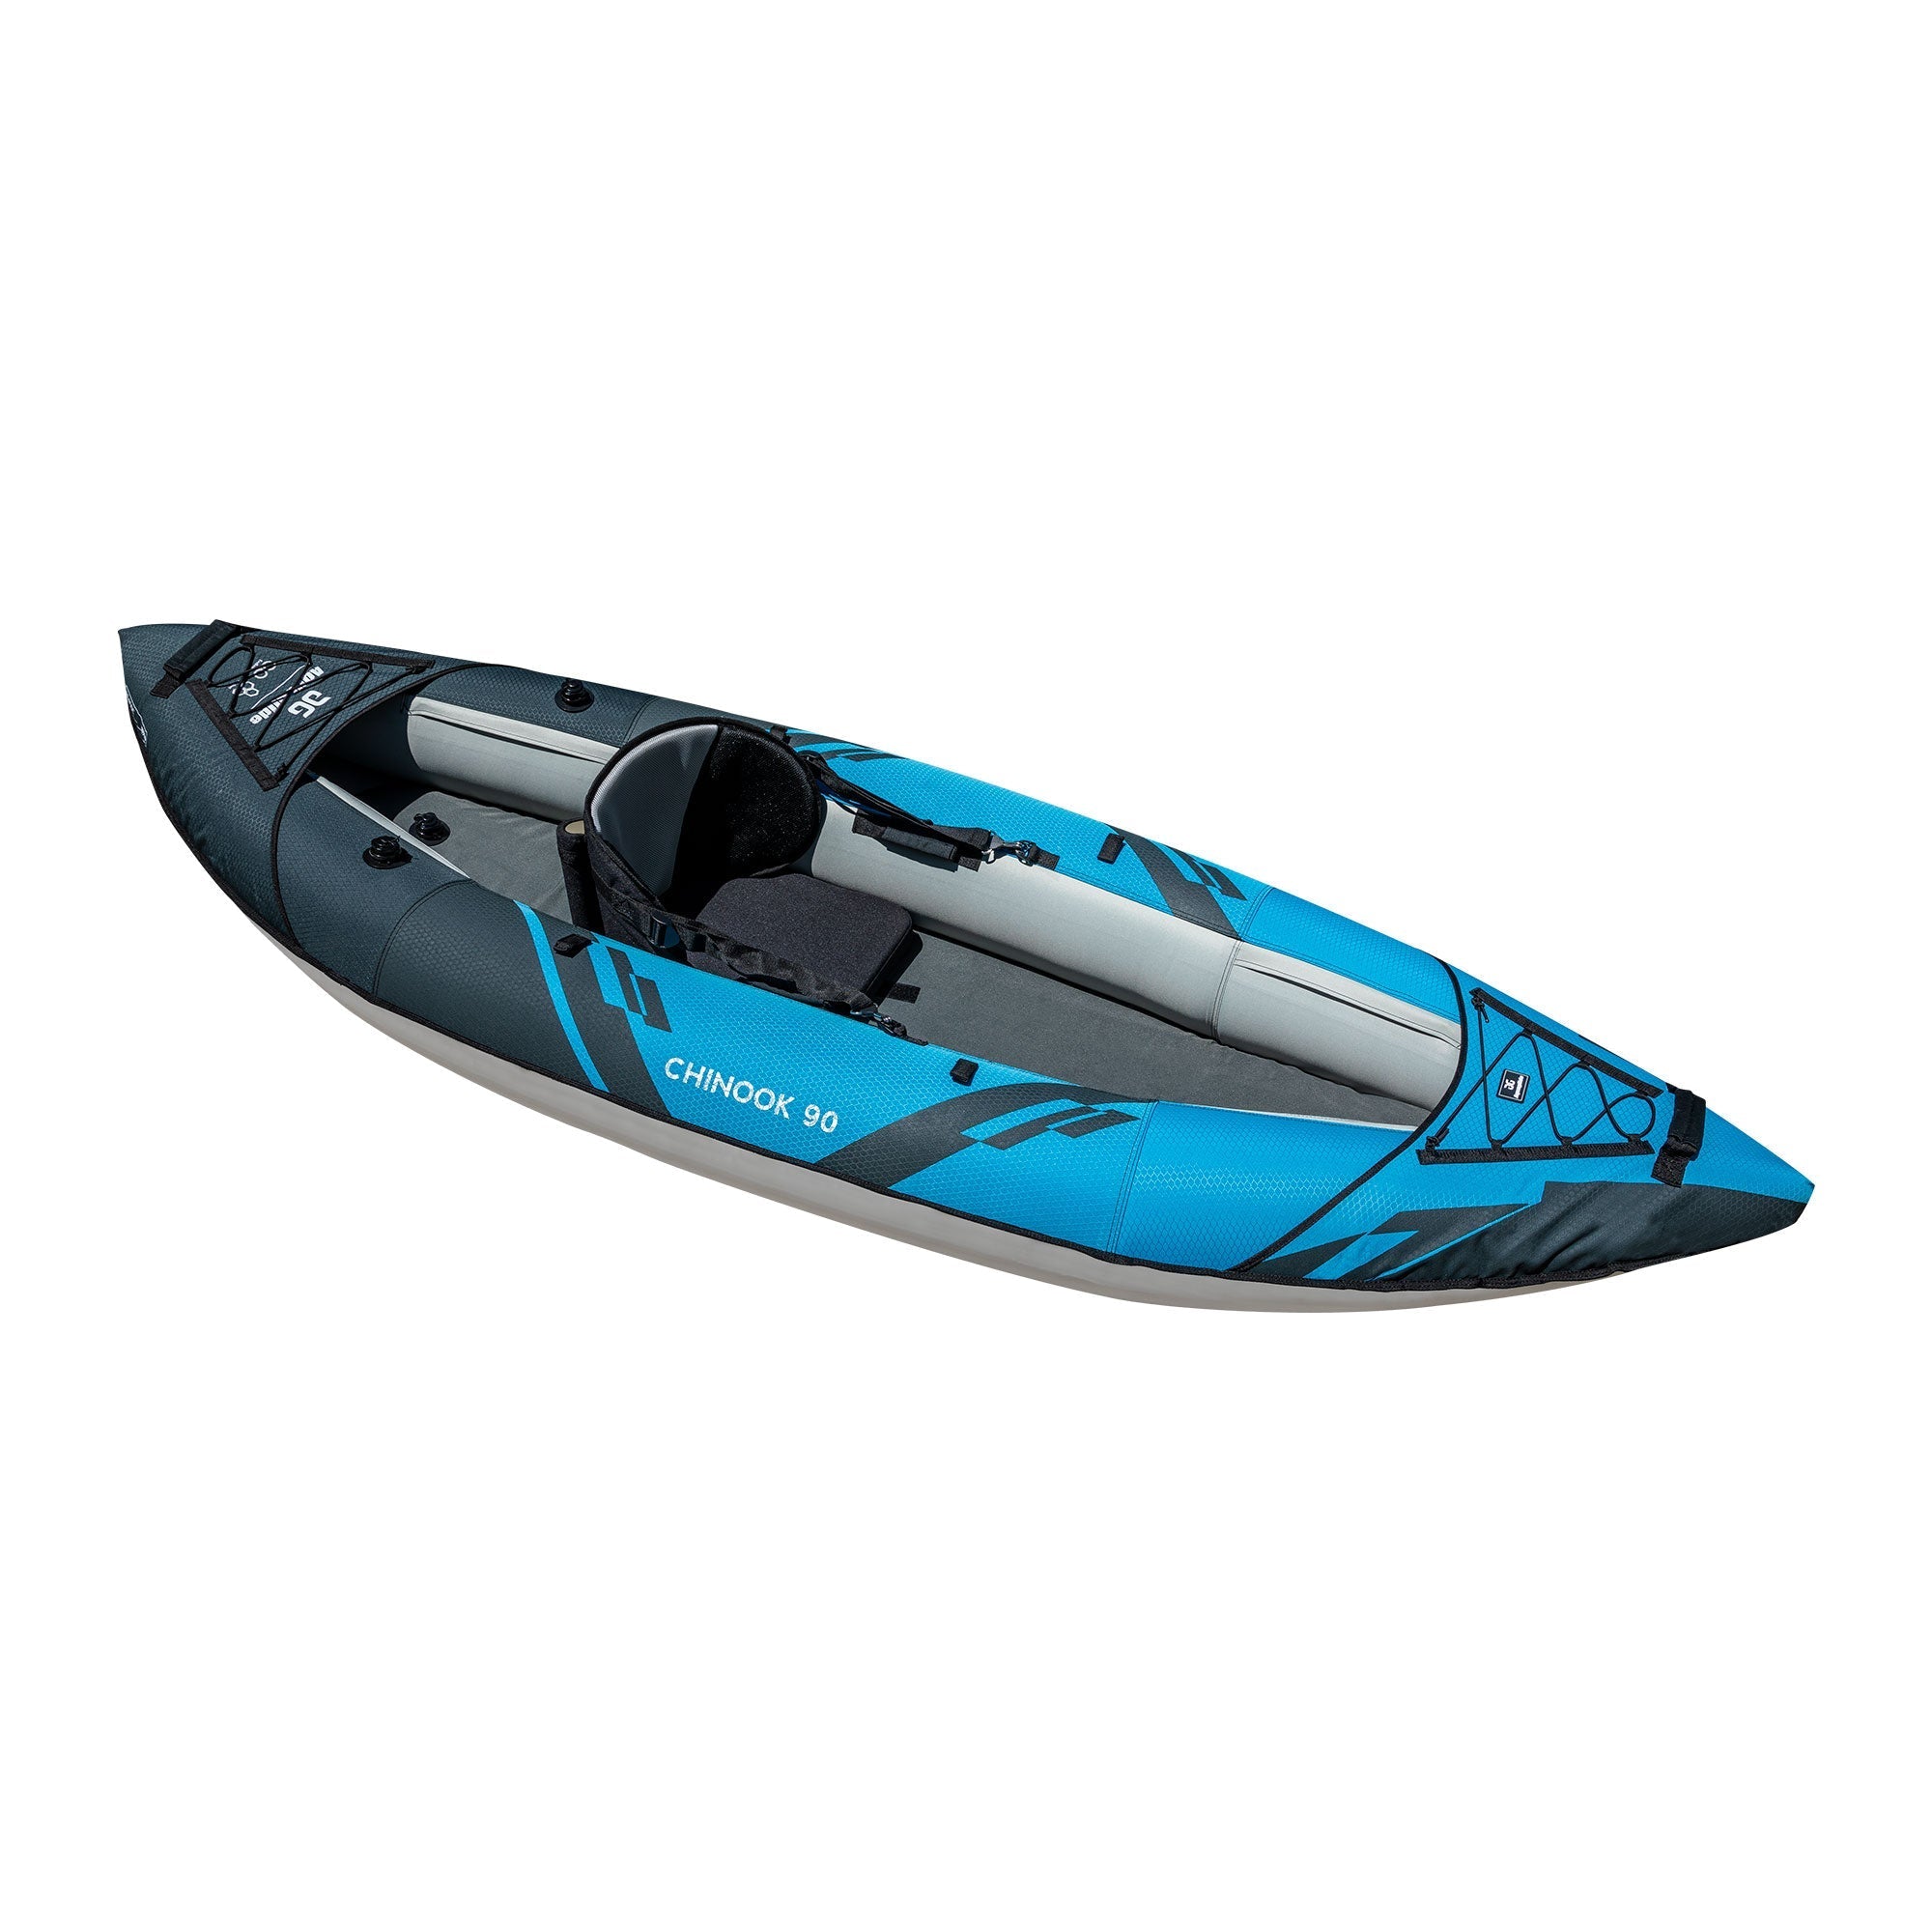 Aquaglide Chinook 90 Package inc Paddle and Pump - Worthing Watersports - Kayaks - Aquaglide